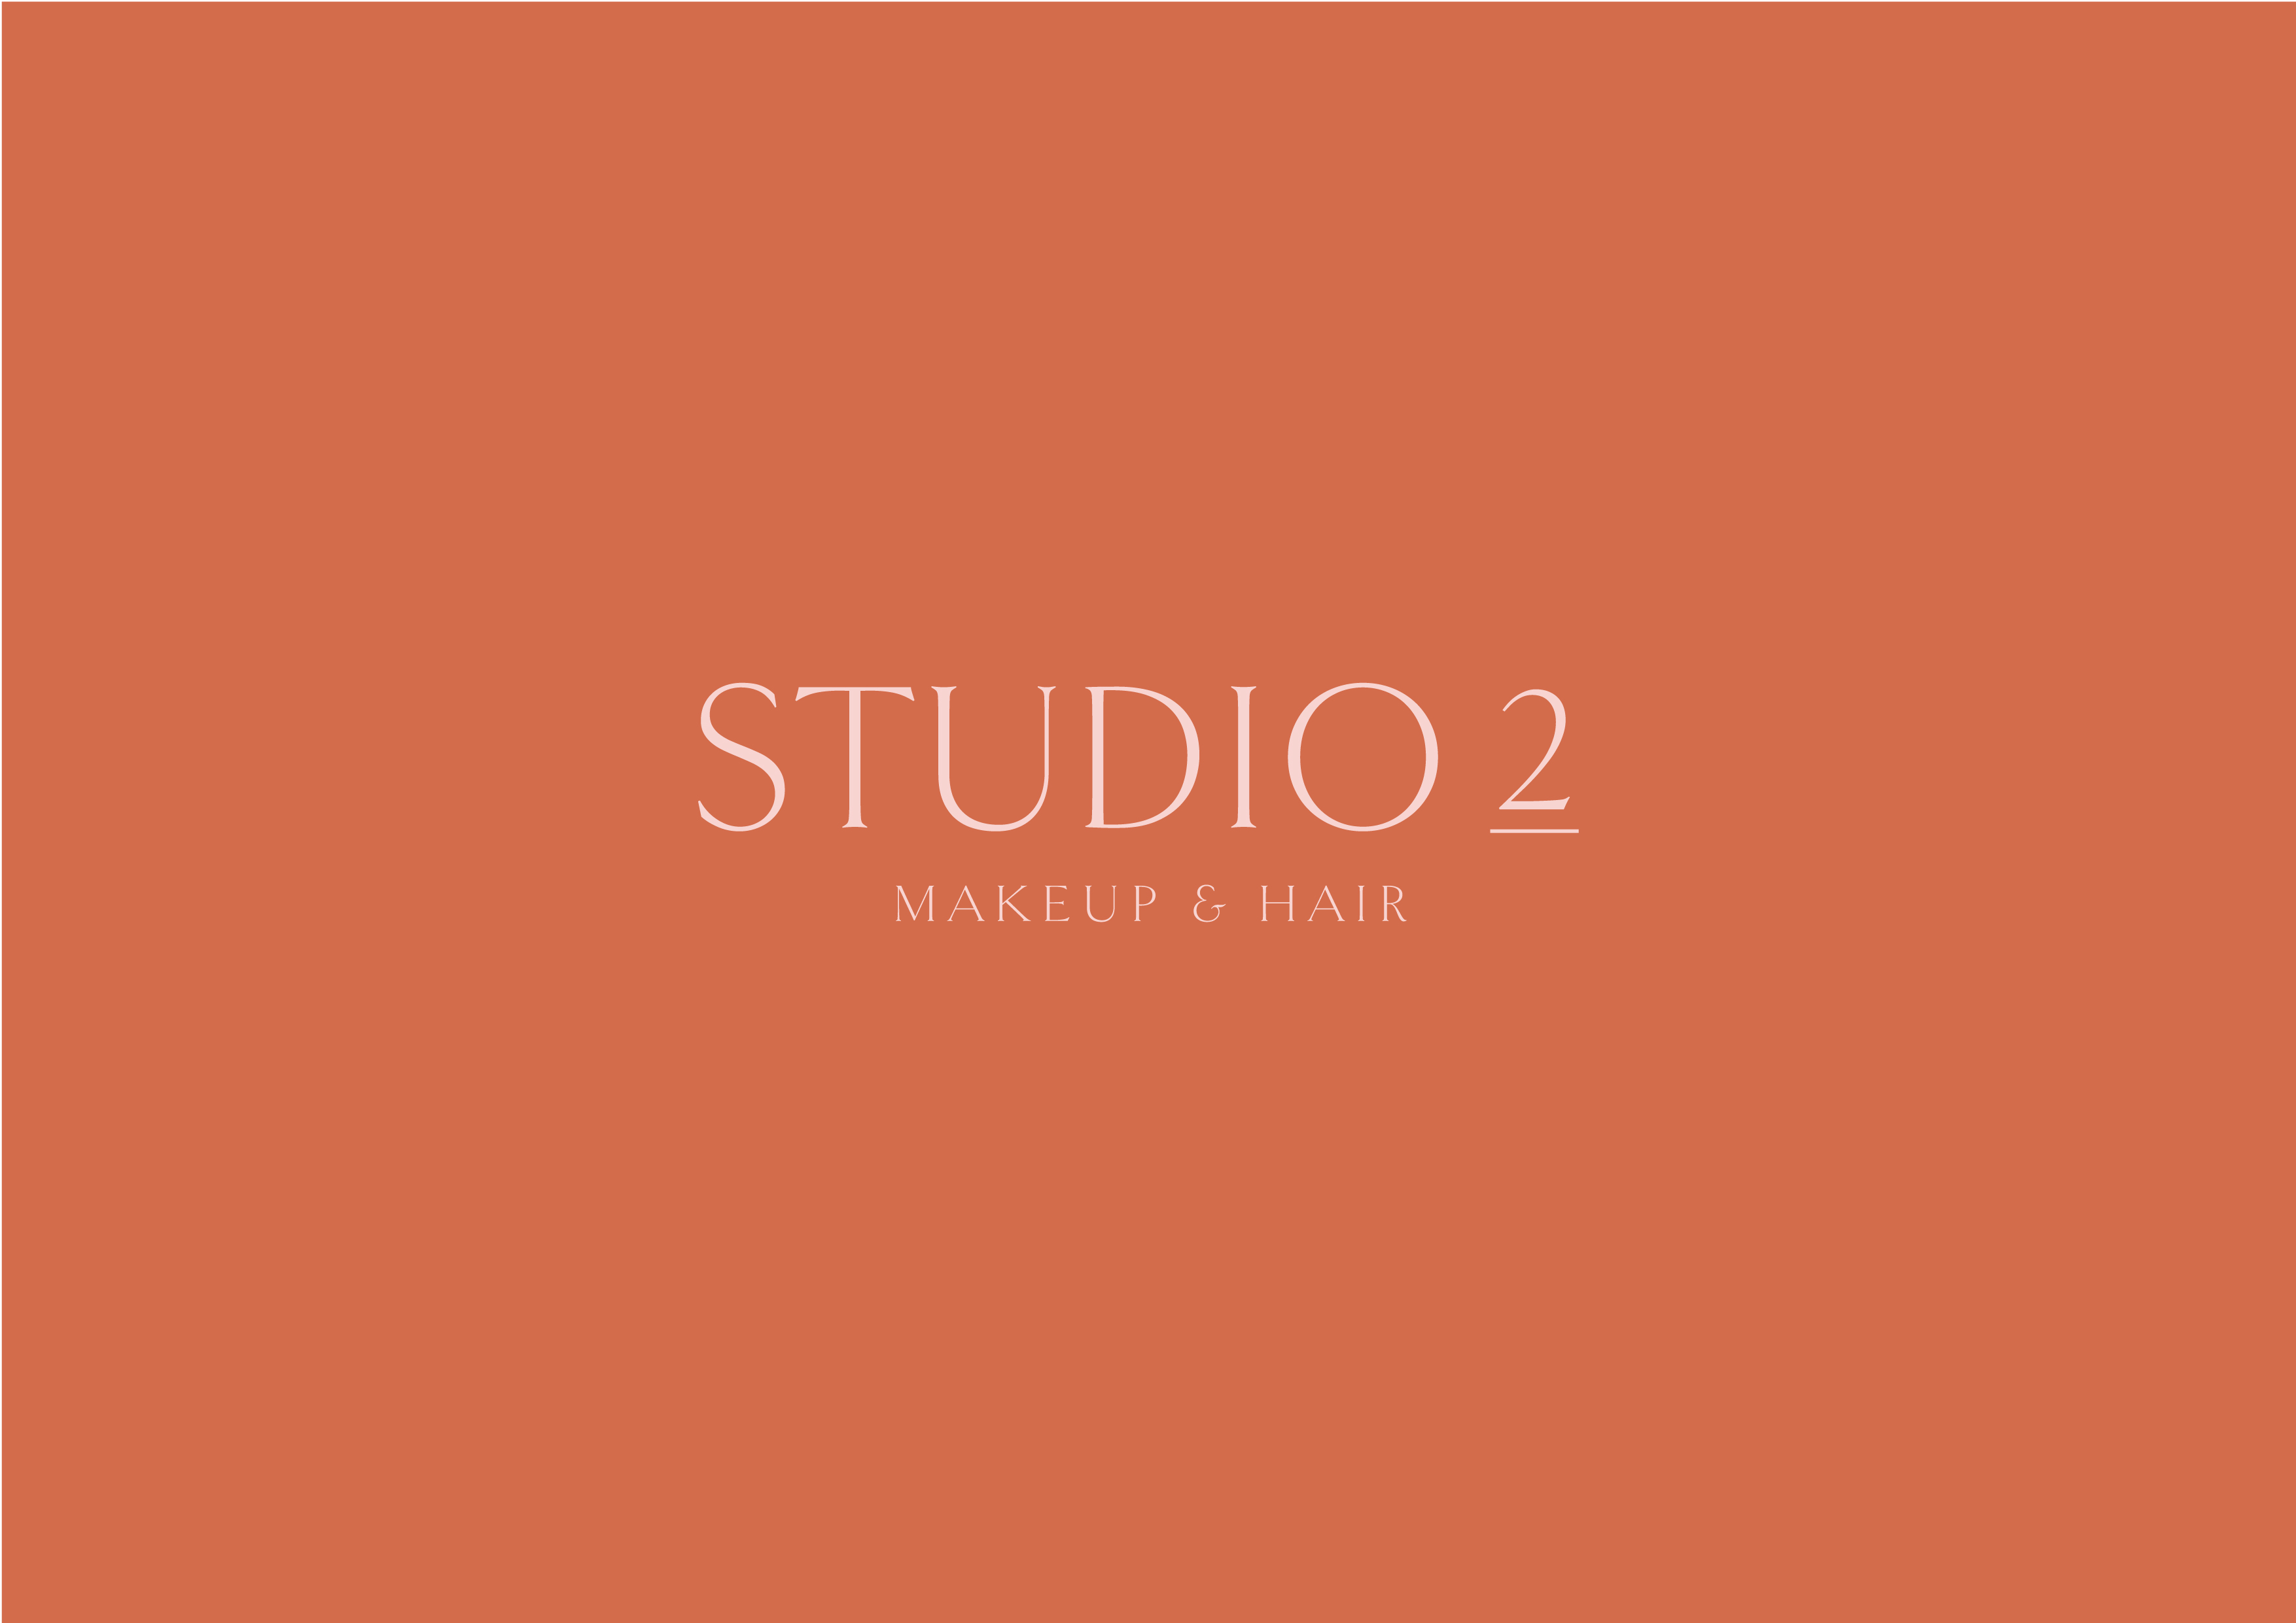 Studio 2 Brand Identity, logo design, styleguide, Studio Mimi Moon